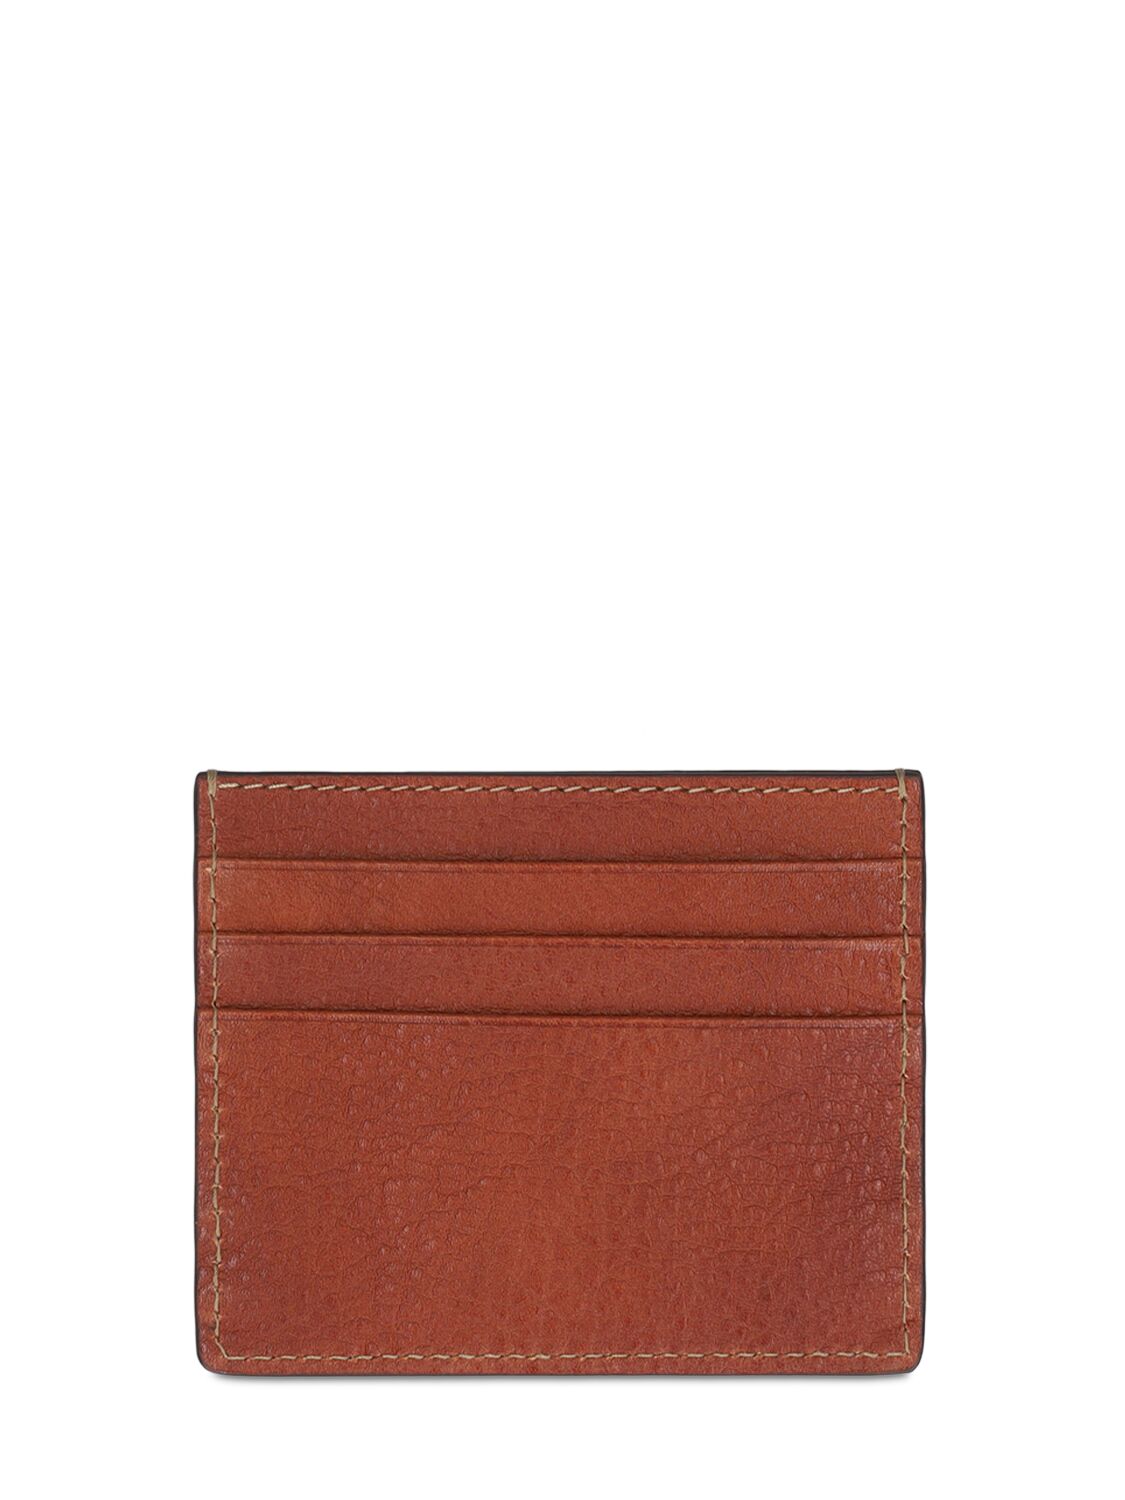 Brunello Cucinelli Leather Card Holder In Copper